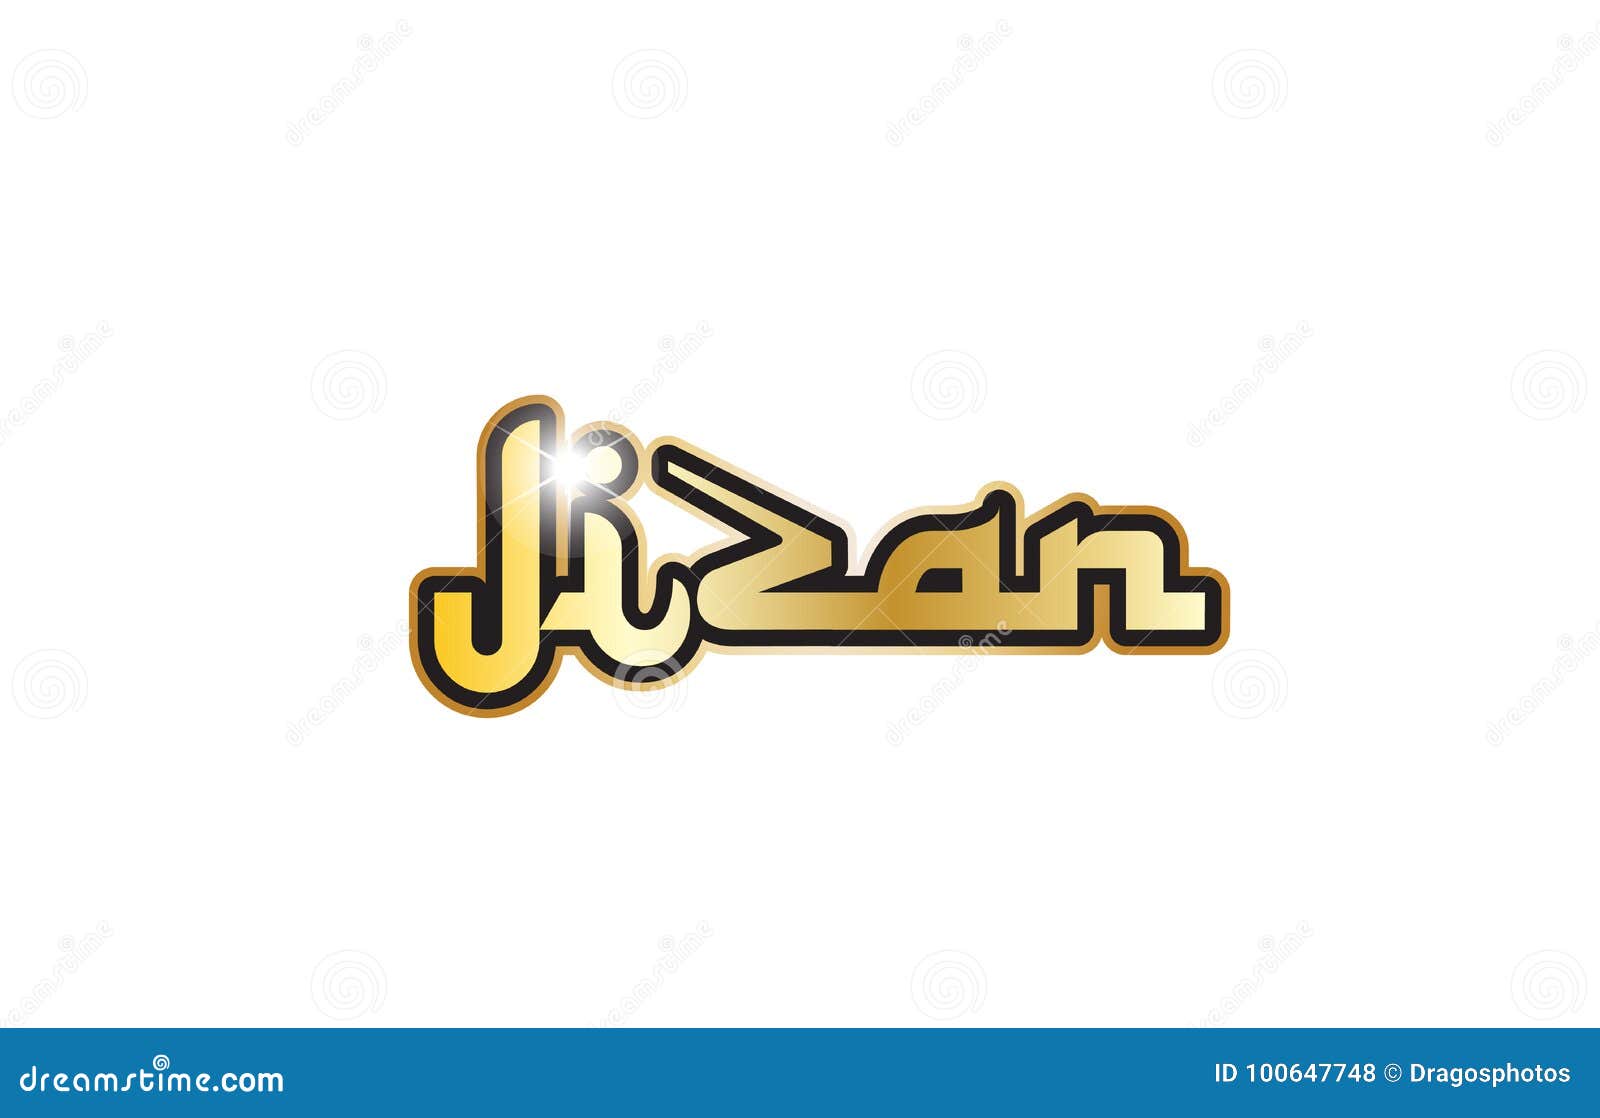 jizan city town saudi arabia text arabic language word 